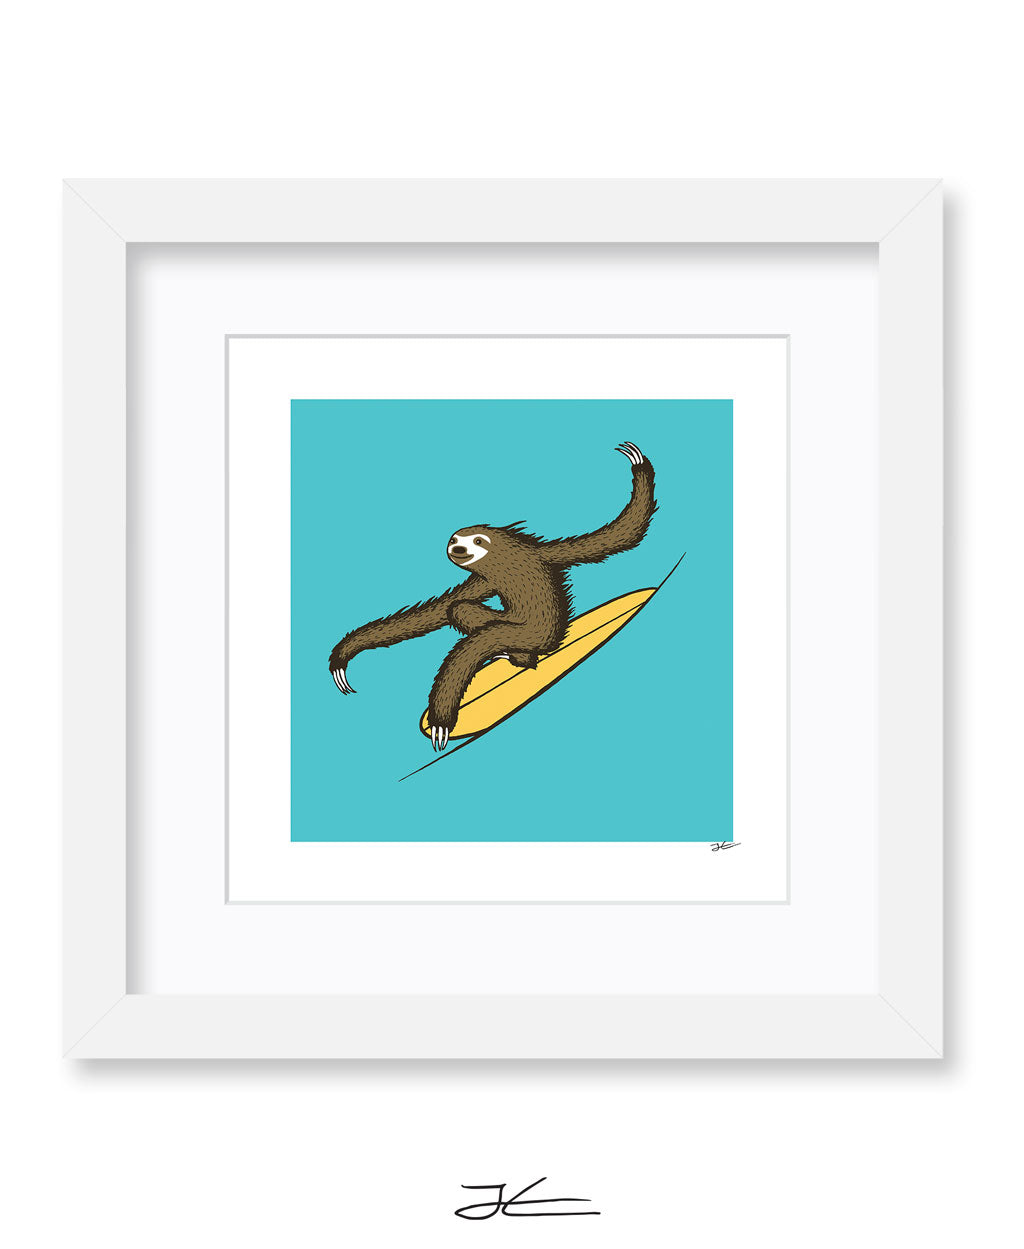 Surfer Sloth Sticker